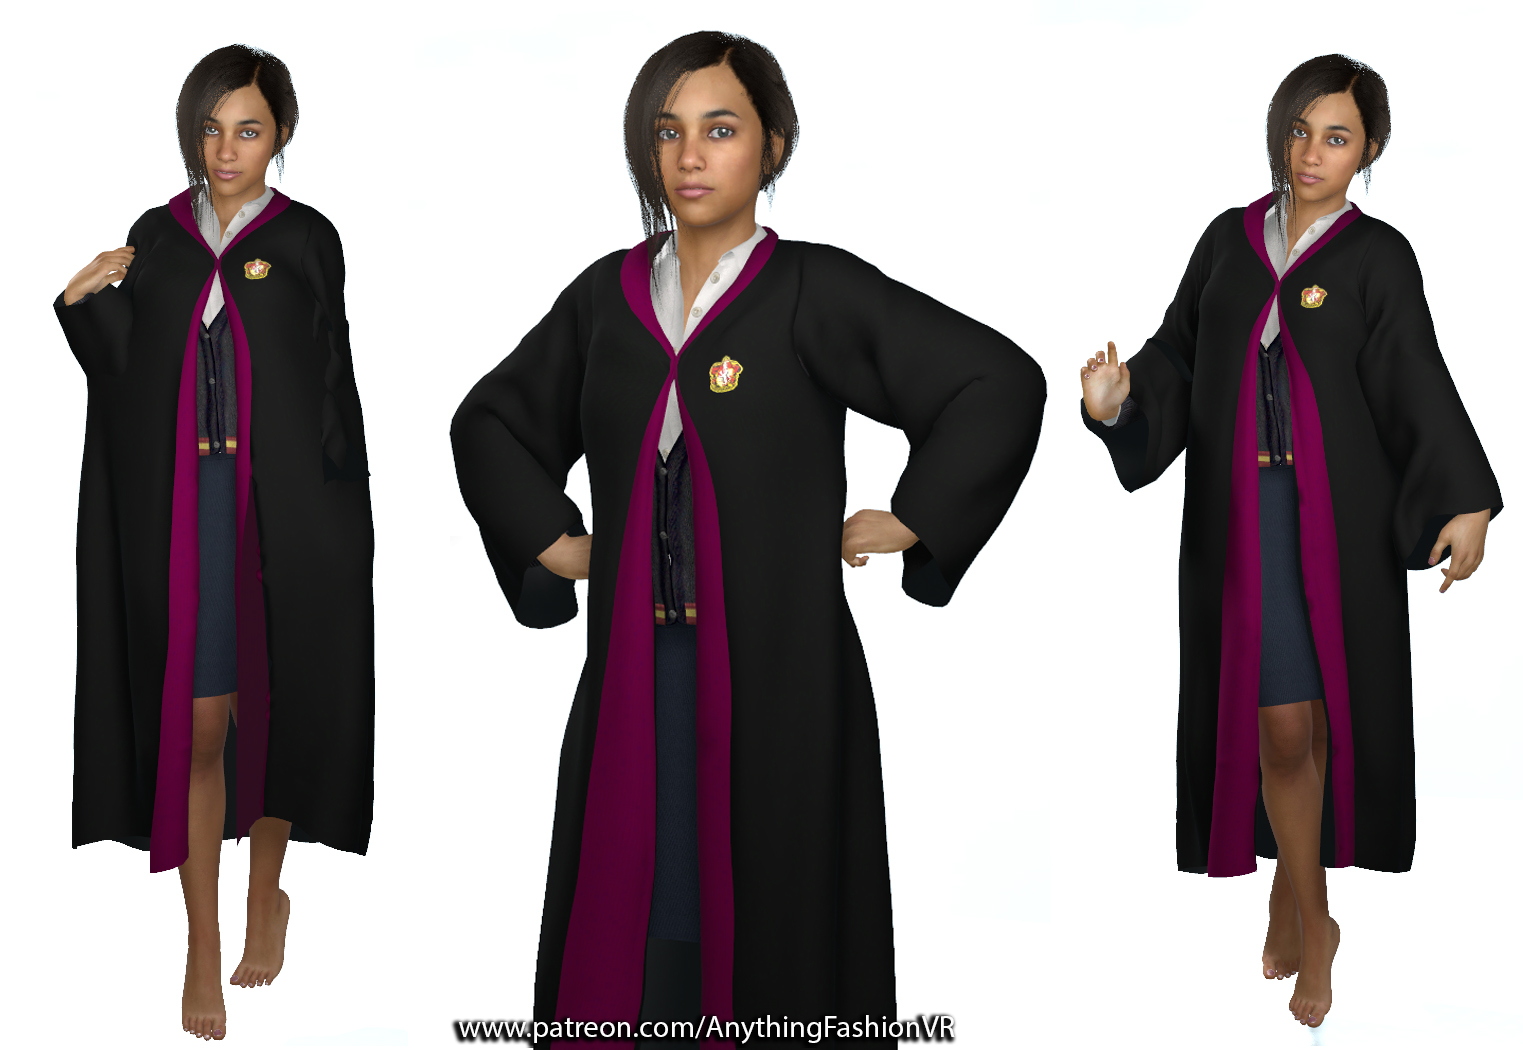 Potter cape 2.jpg